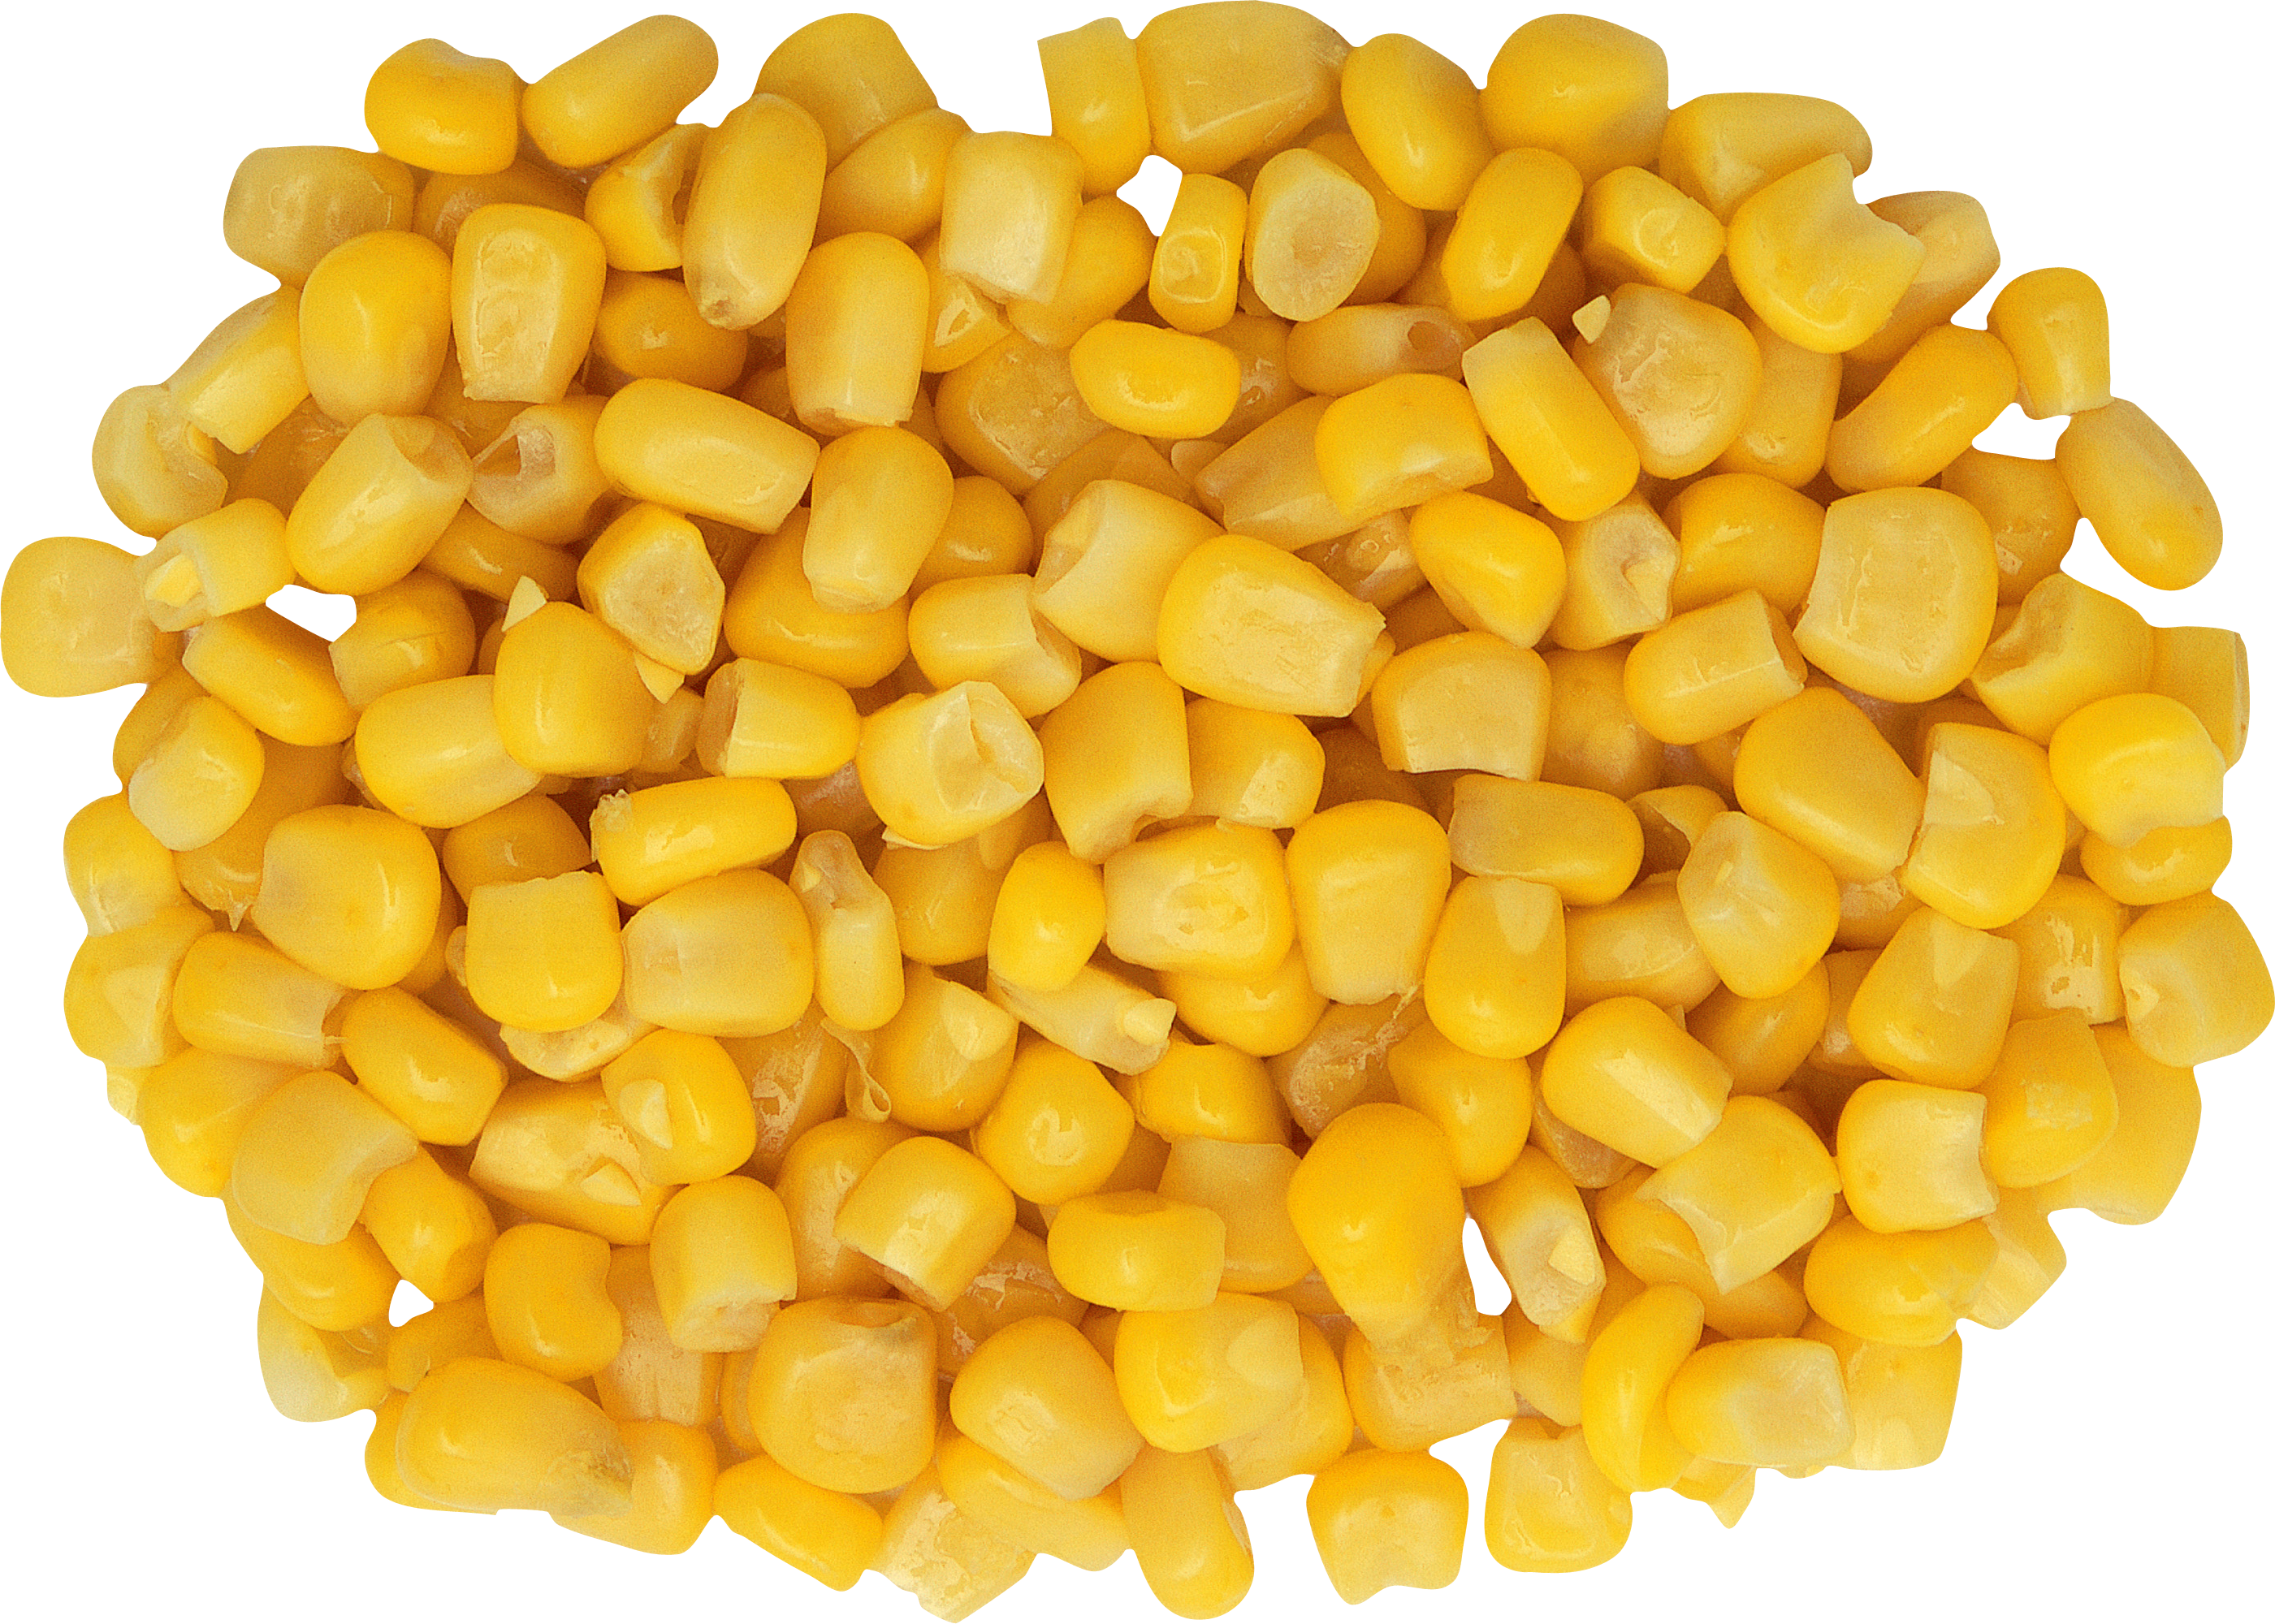 HQ Corn Wallpapers | File 8605.74Kb